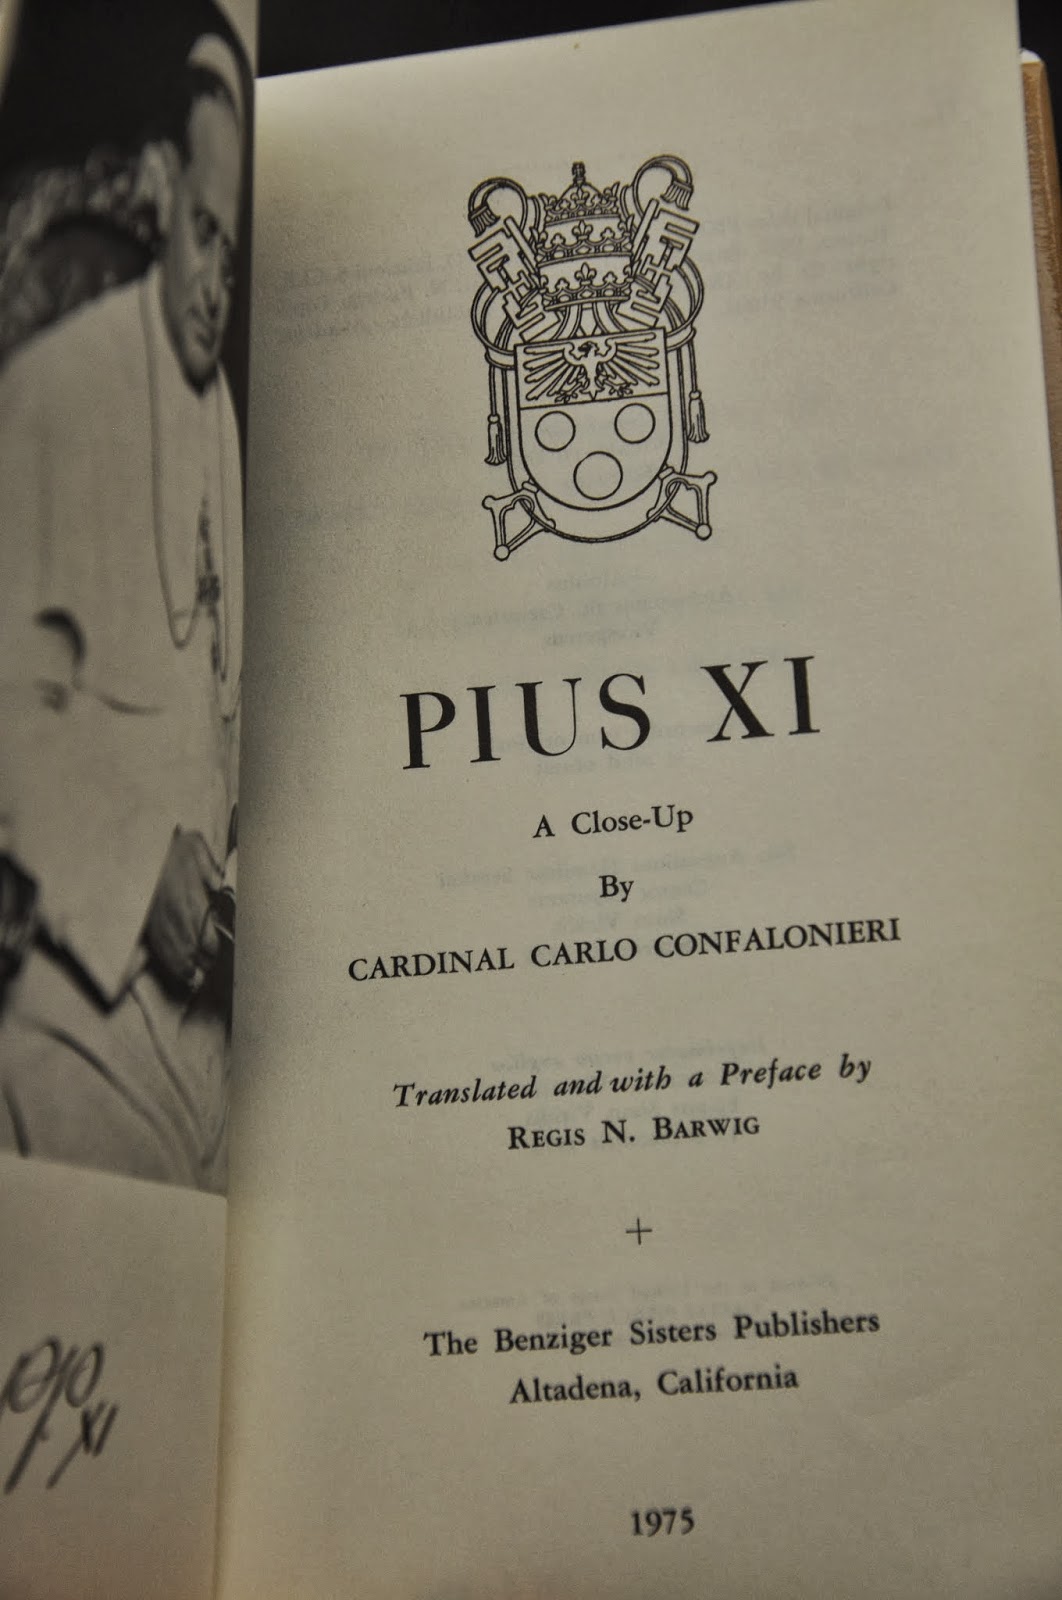 orbis-catholicus-secundus-reading-the-life-of-pius-xi-written-by-his-secretary-card-confalonieri